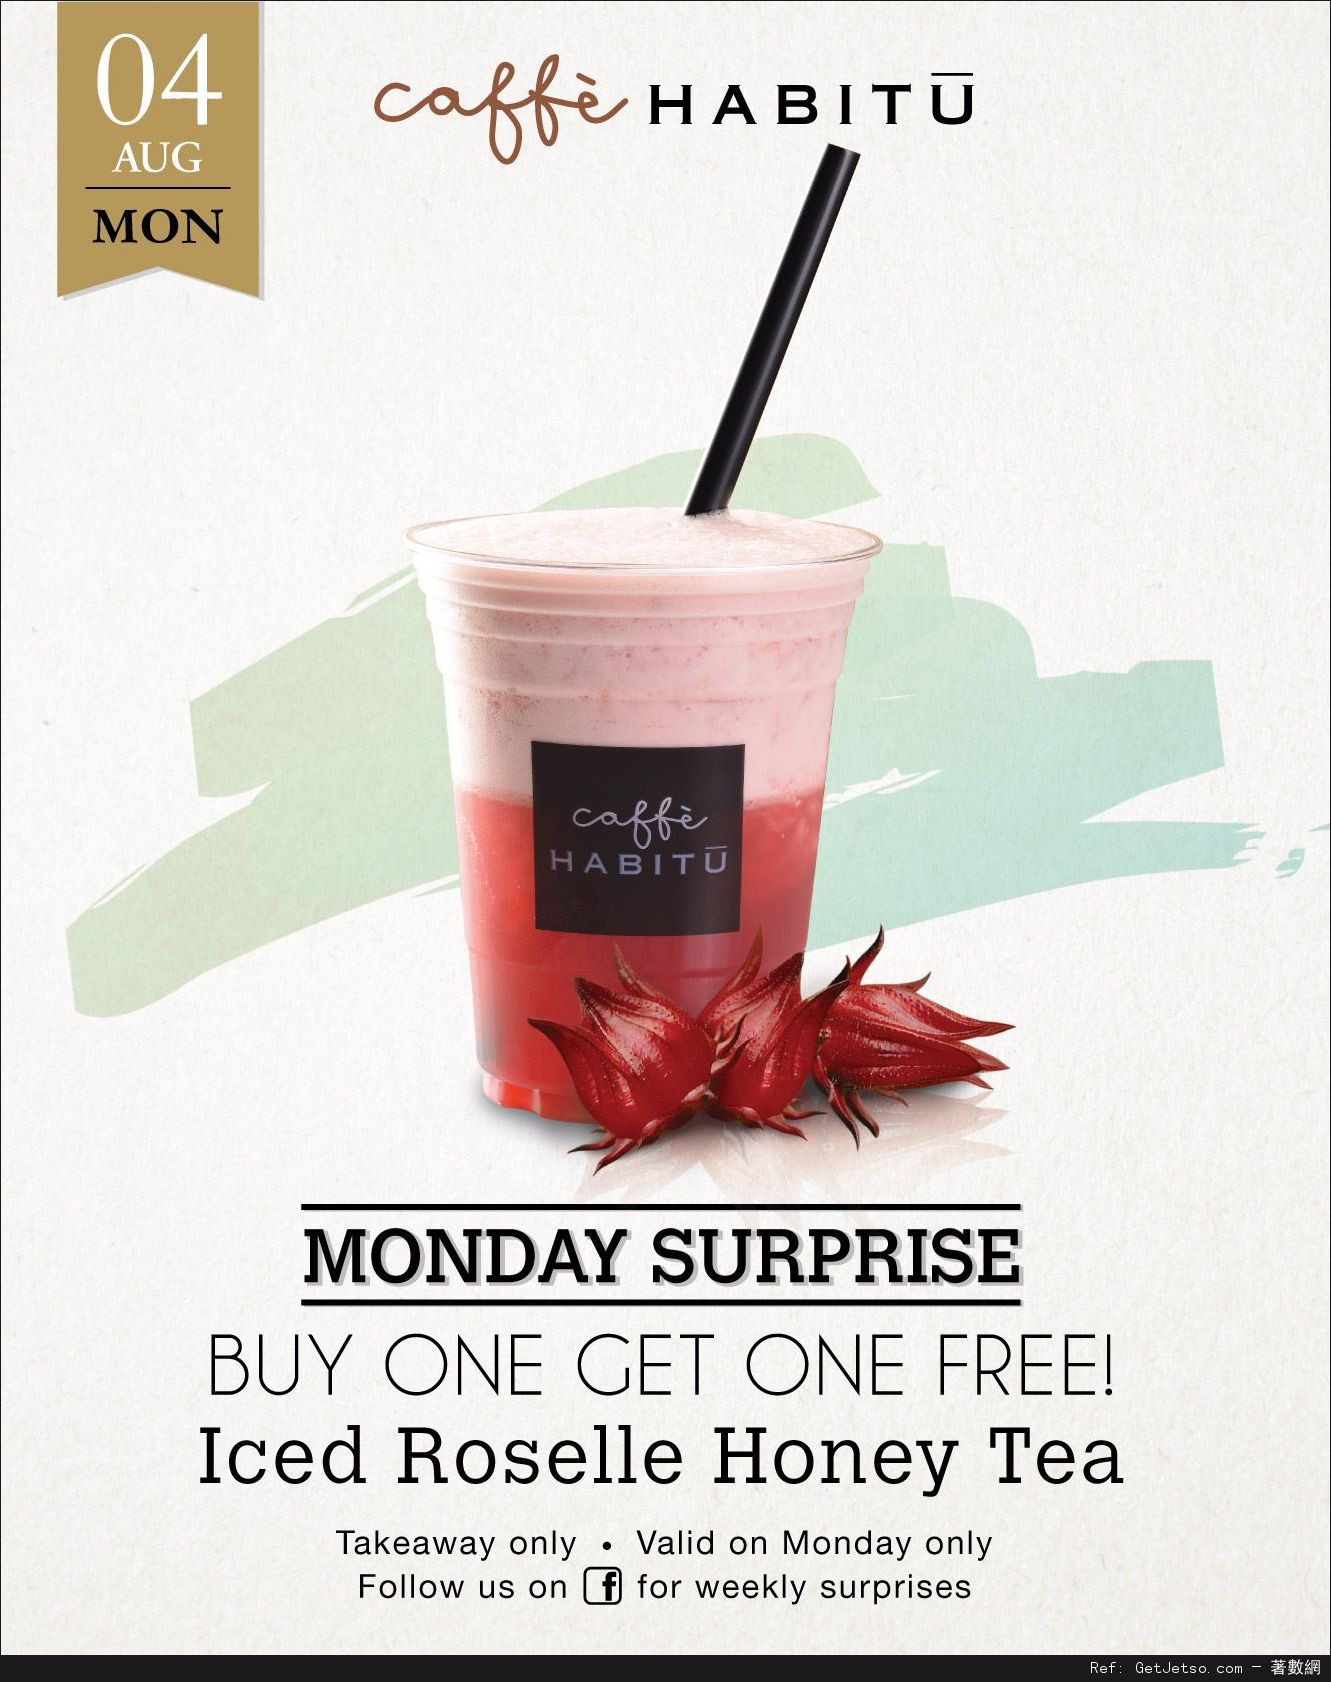 Caffe HABITU Iced Roselle Honey Tea 買1送1優惠(14年8月4日)圖片1